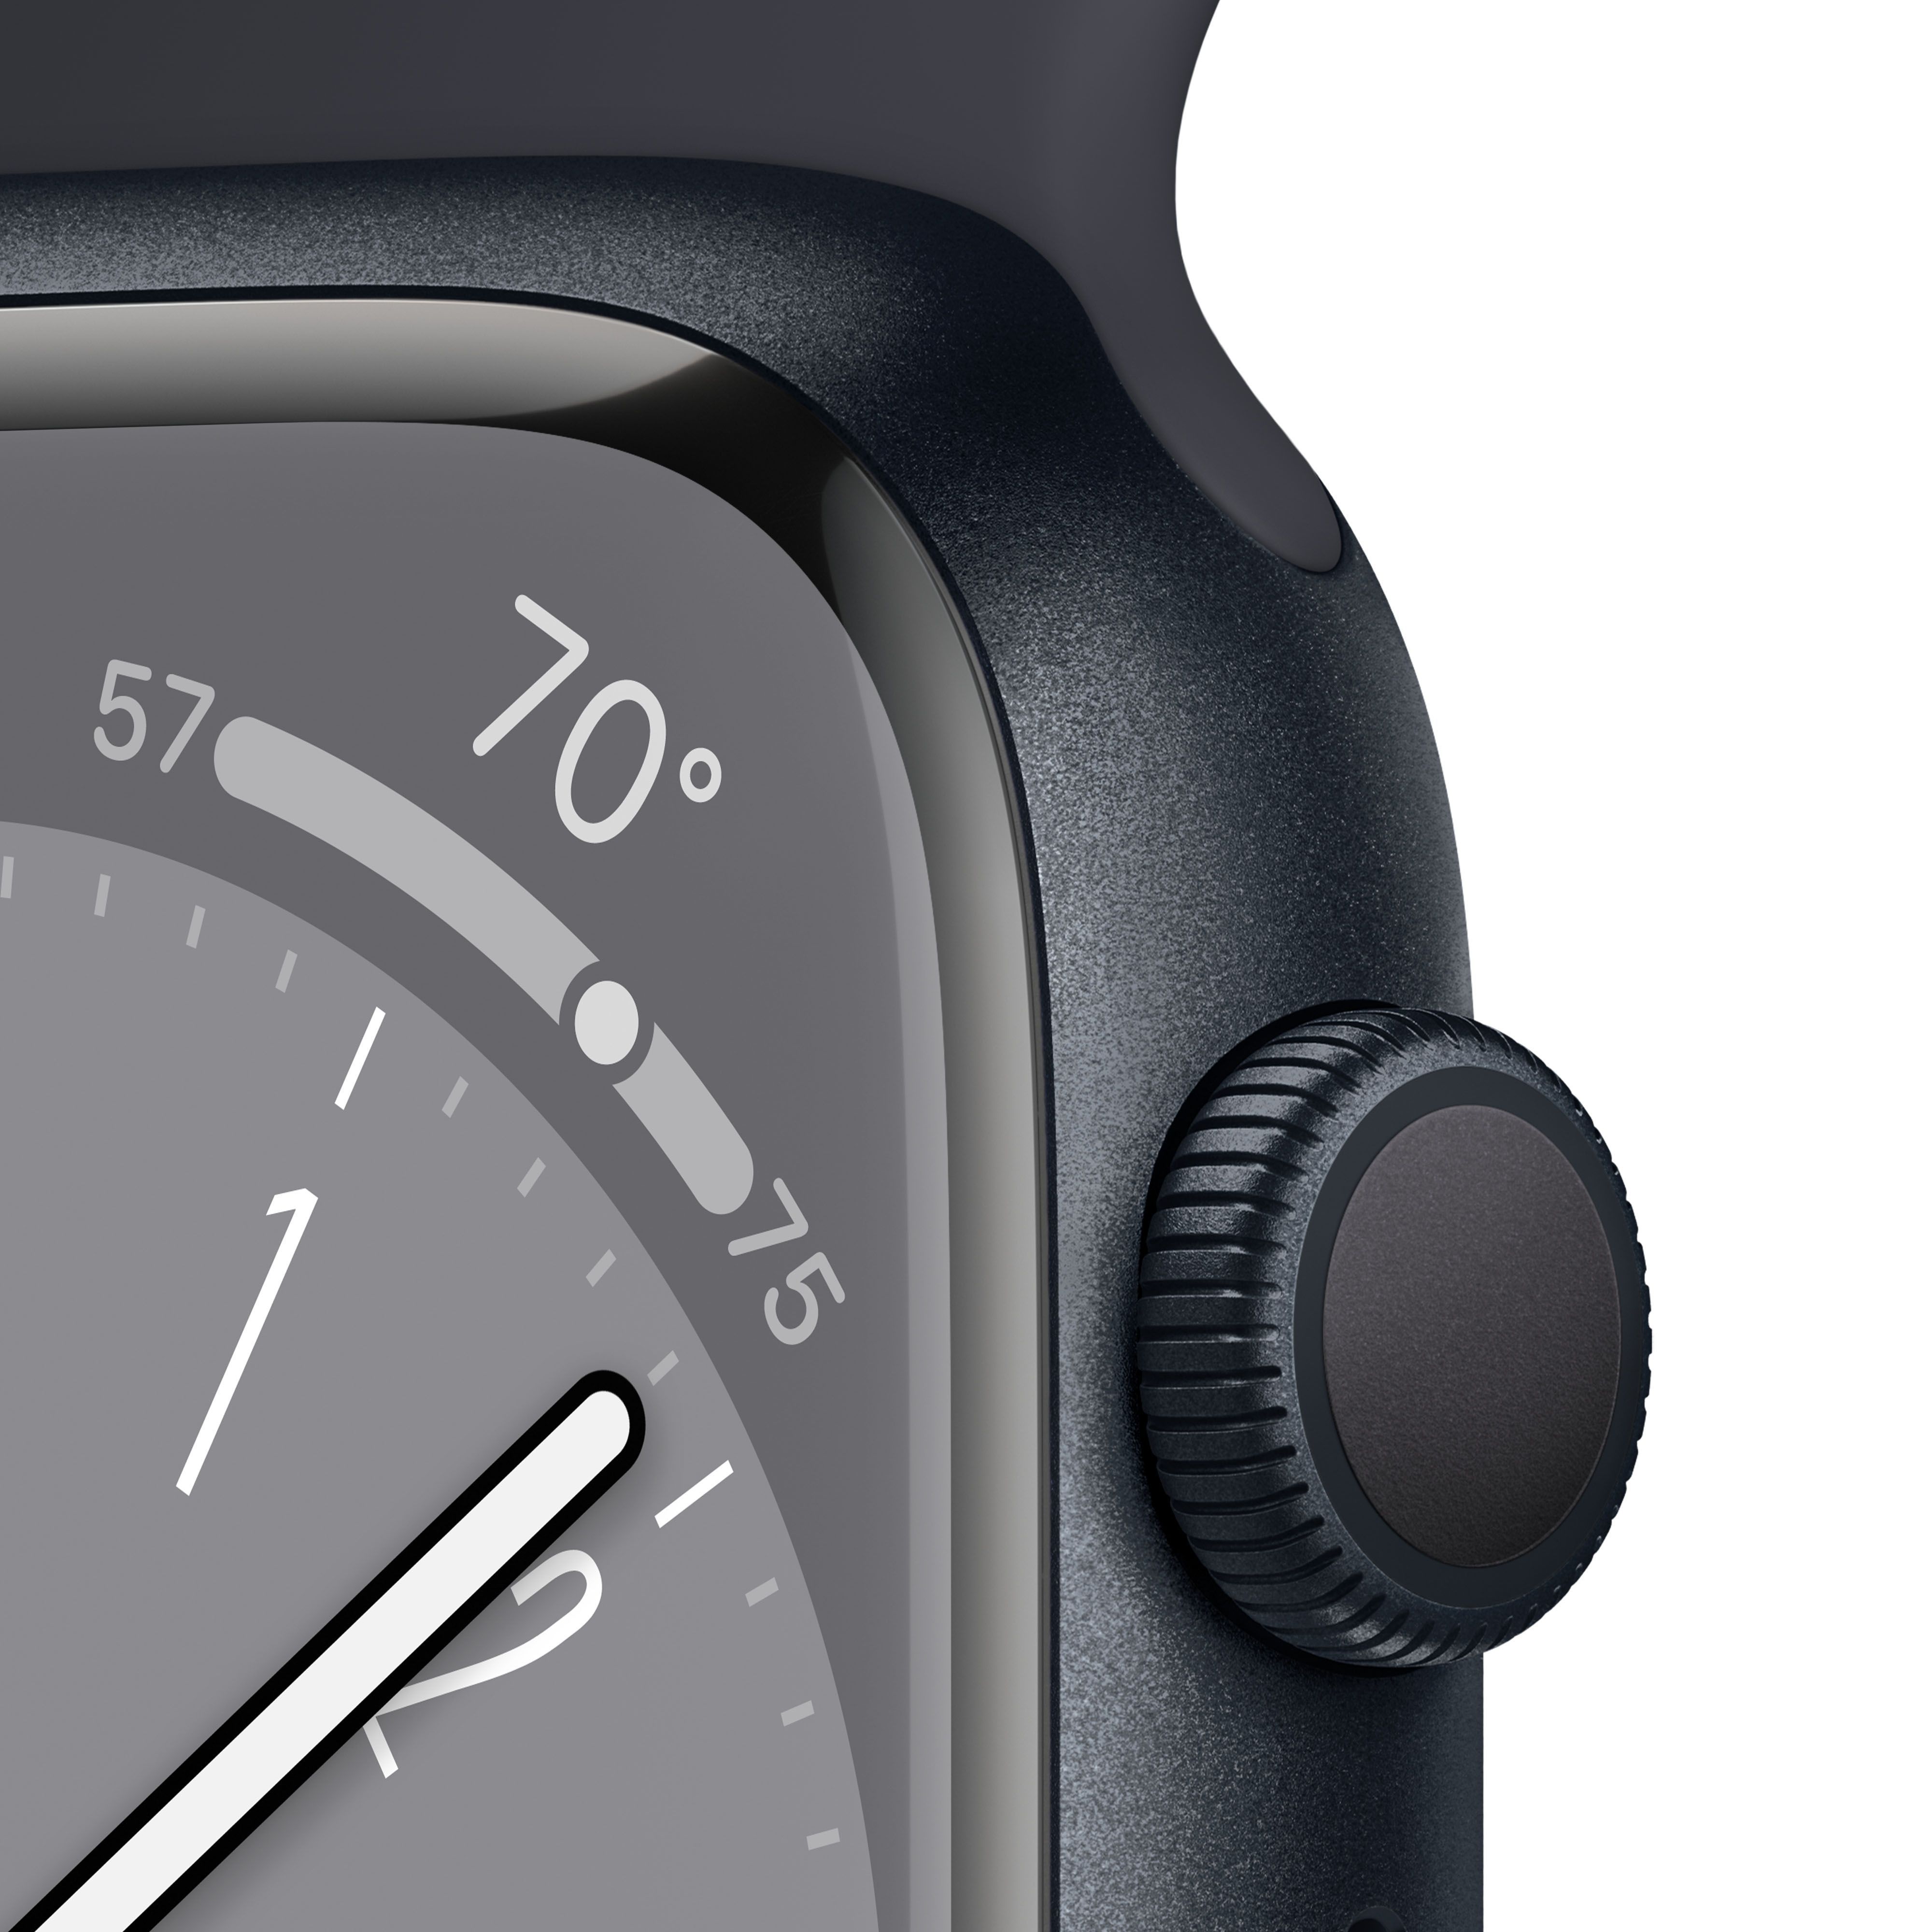 Watch 8 45 мм. Apple watch Series 8 45mm. Apple watch 8 45mm Midnight. Apple watch s8 45mm Midnight. Apple watch 8 41 Midnight.